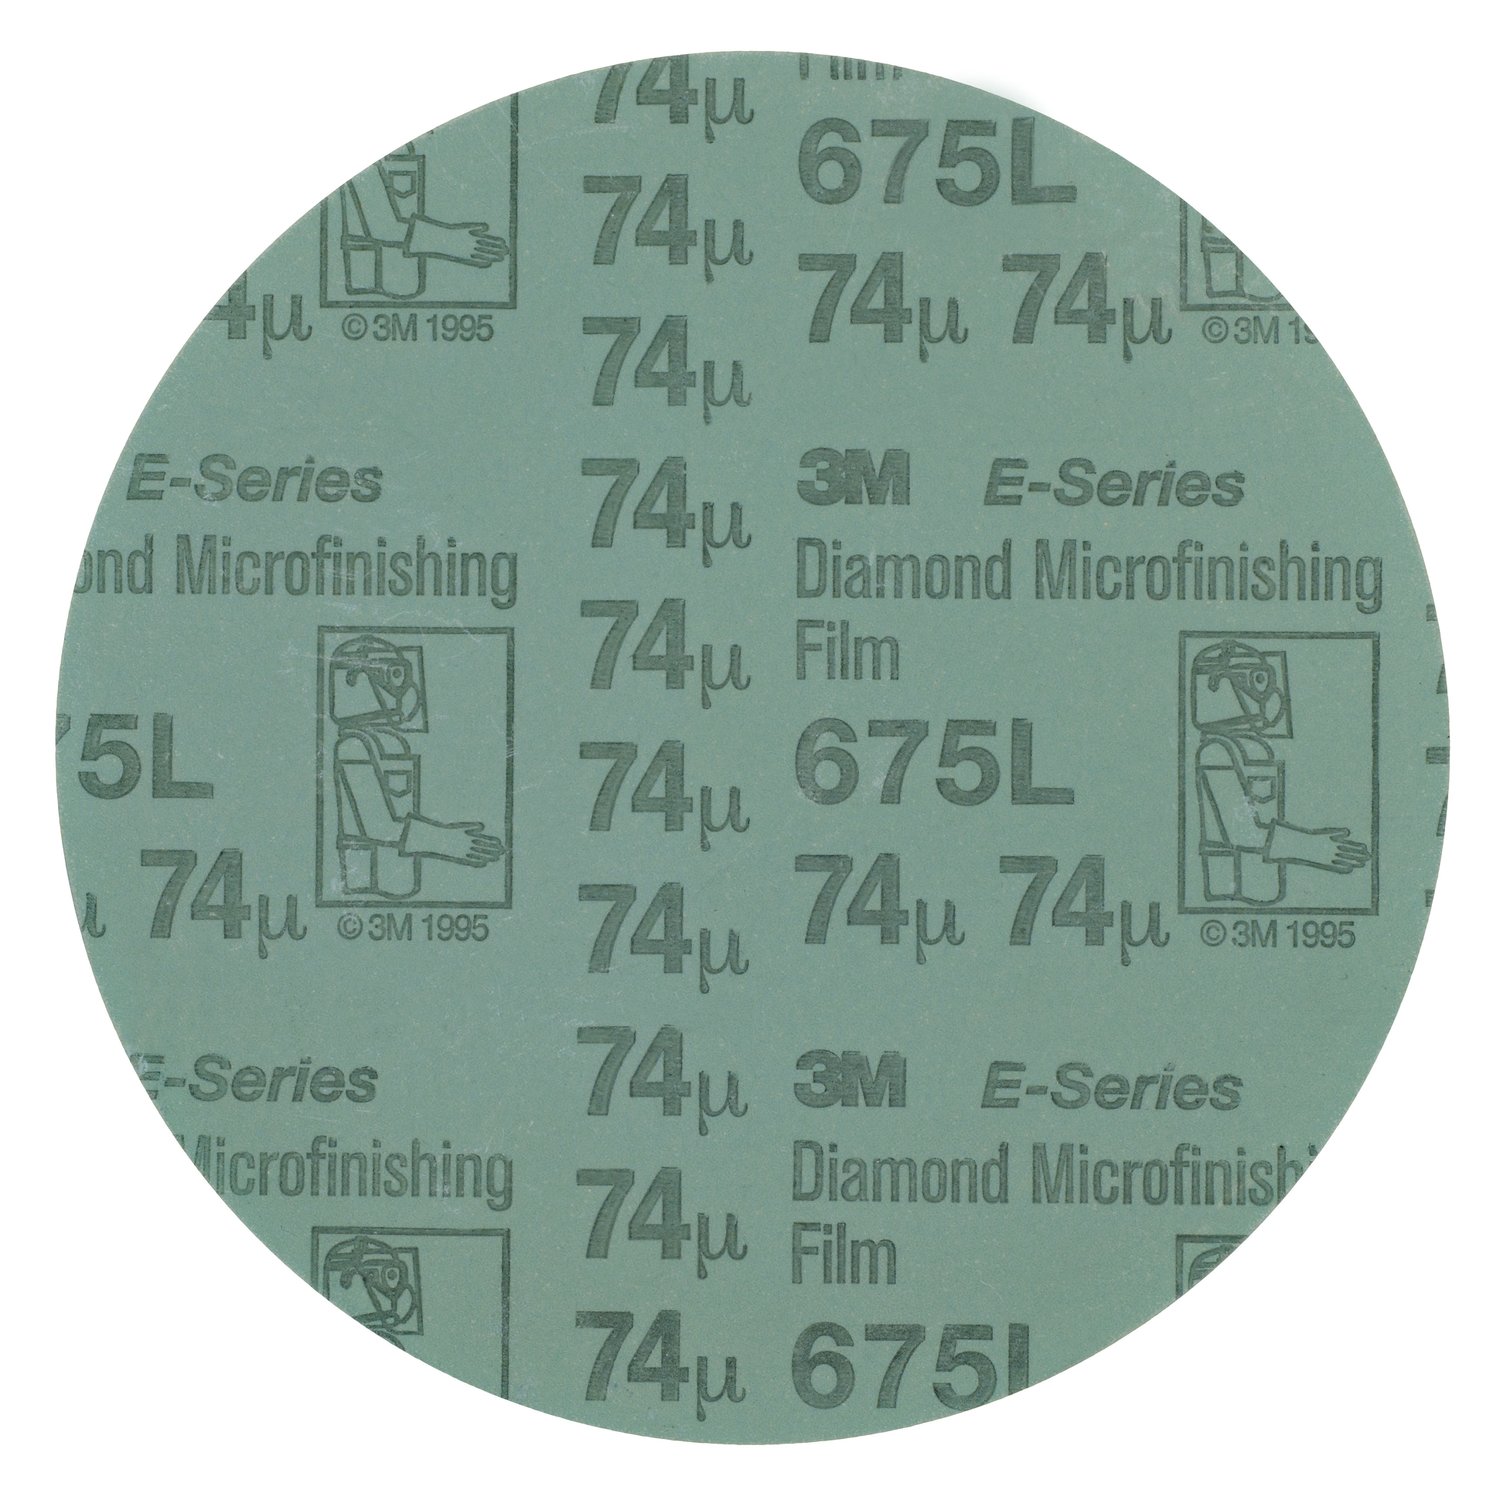 7010533420 - 3M Hookit Diamond Microfinishing Film Disc 675L, 45 Mic 5MIL, Gray, 2
in x NH, Die 200P